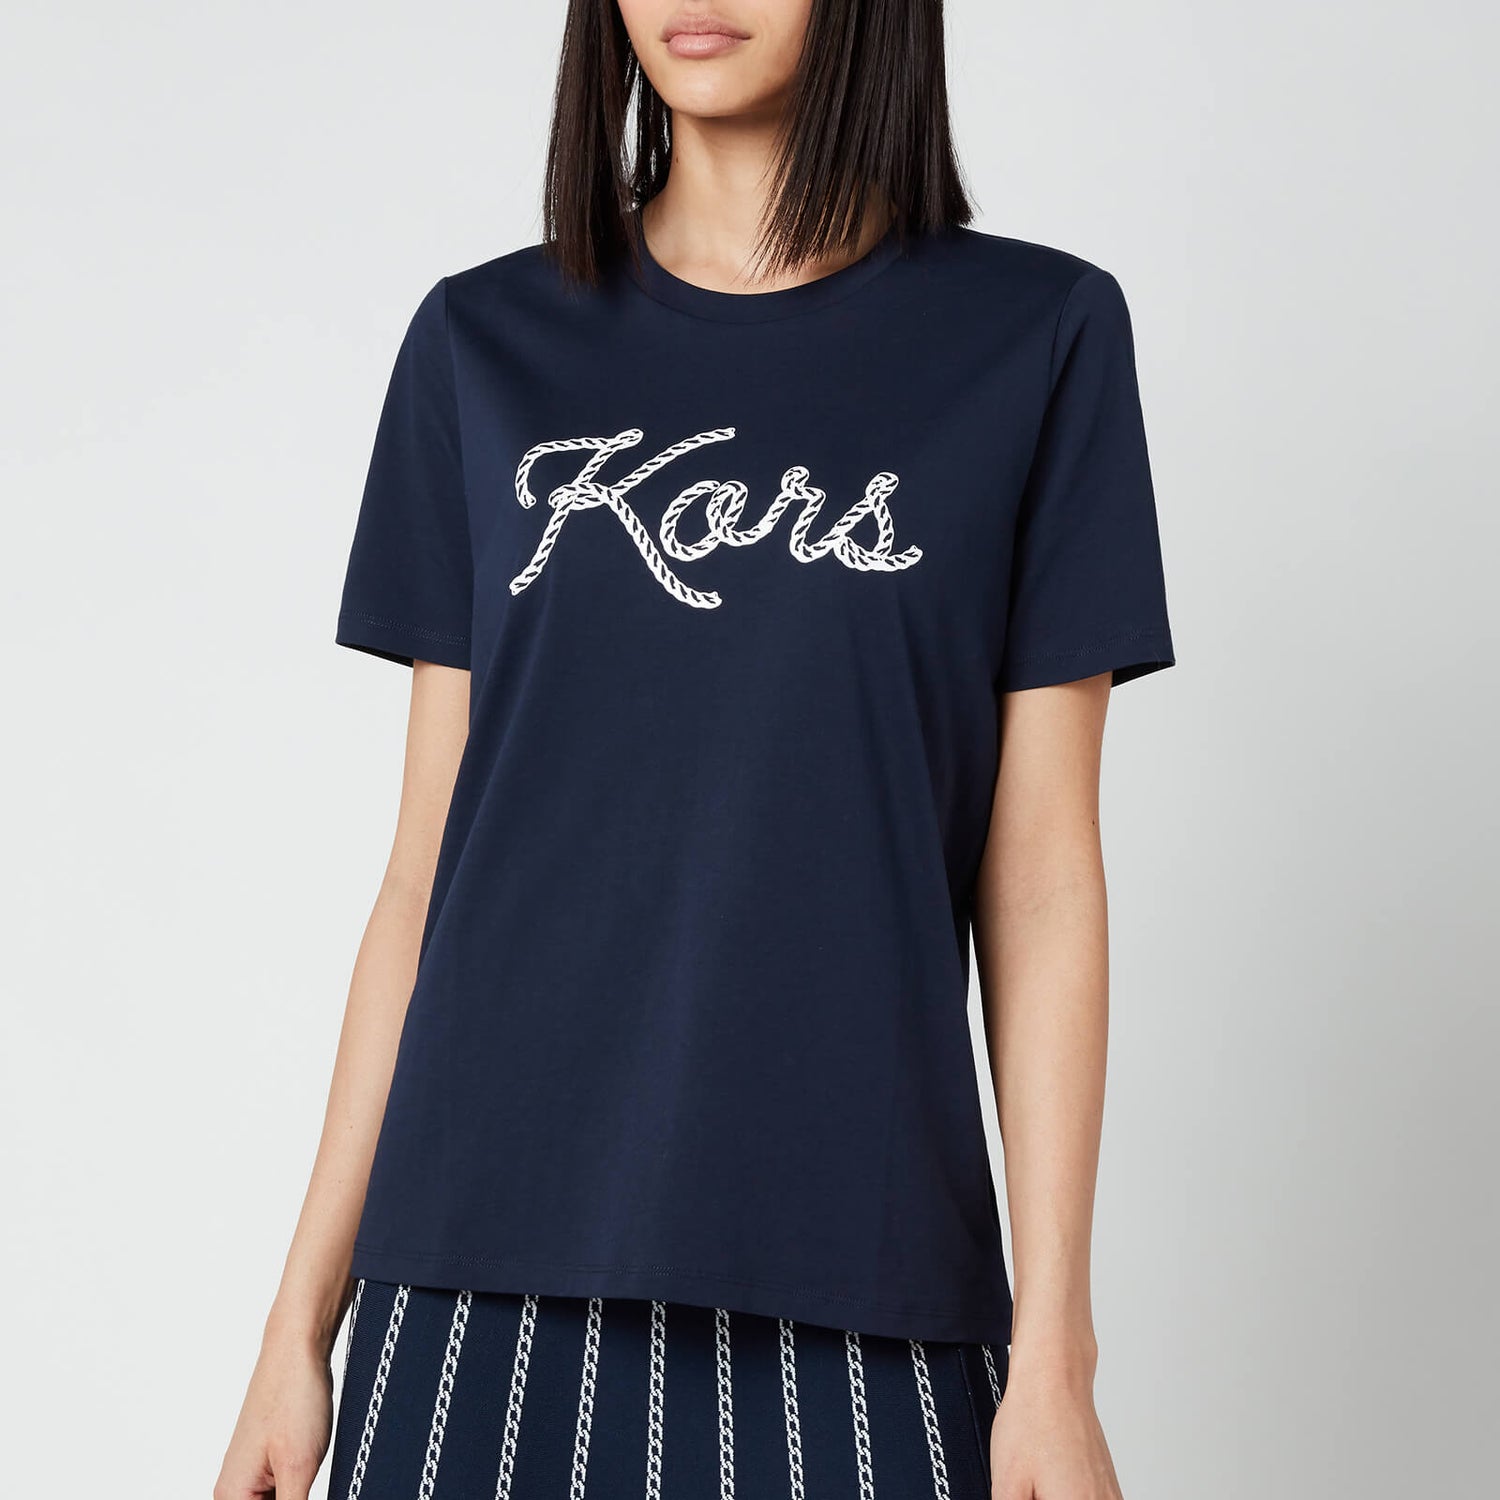 MICHAEL Michael Kors Women's Kors Rope Graphic T-Shirt - Midnight Blue